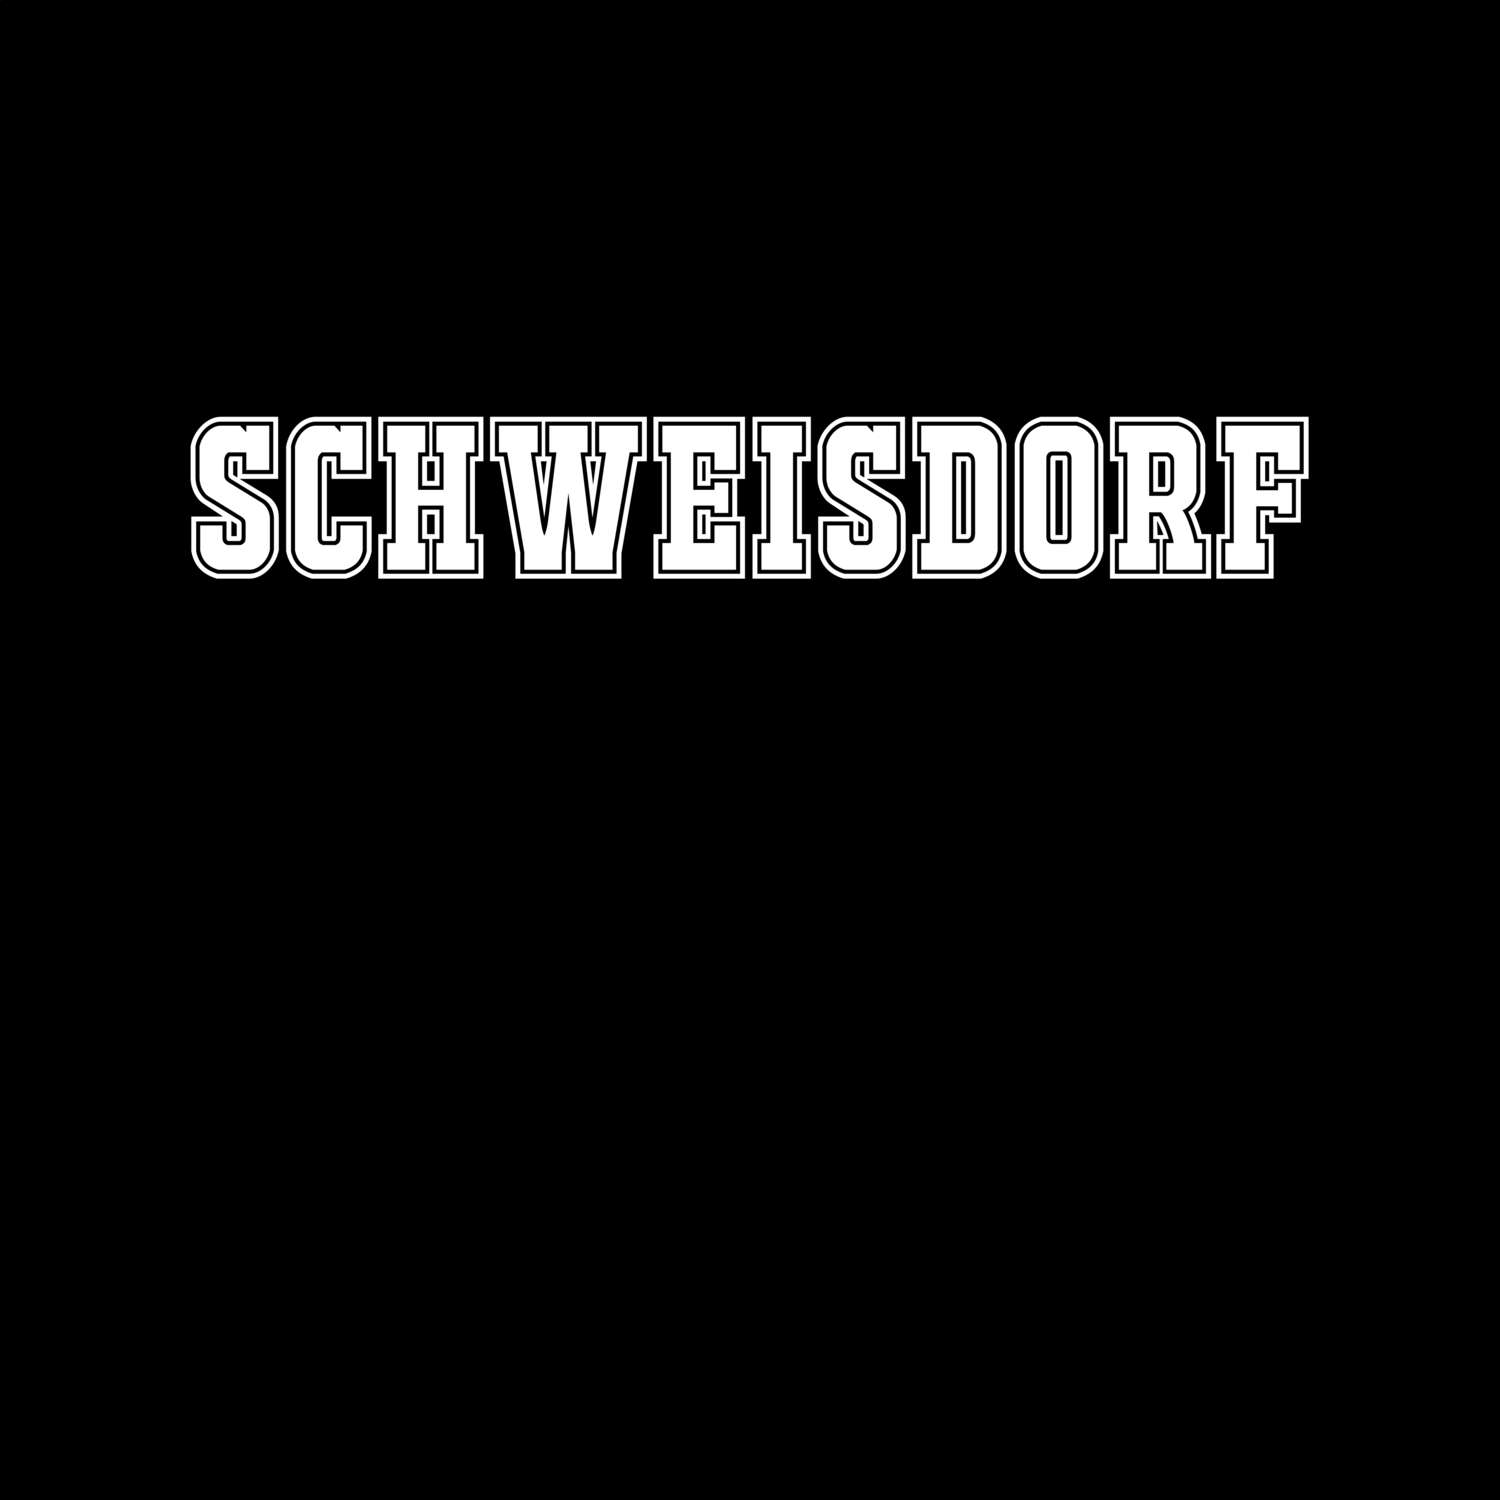 Schweisdorf T-Shirt »Classic«